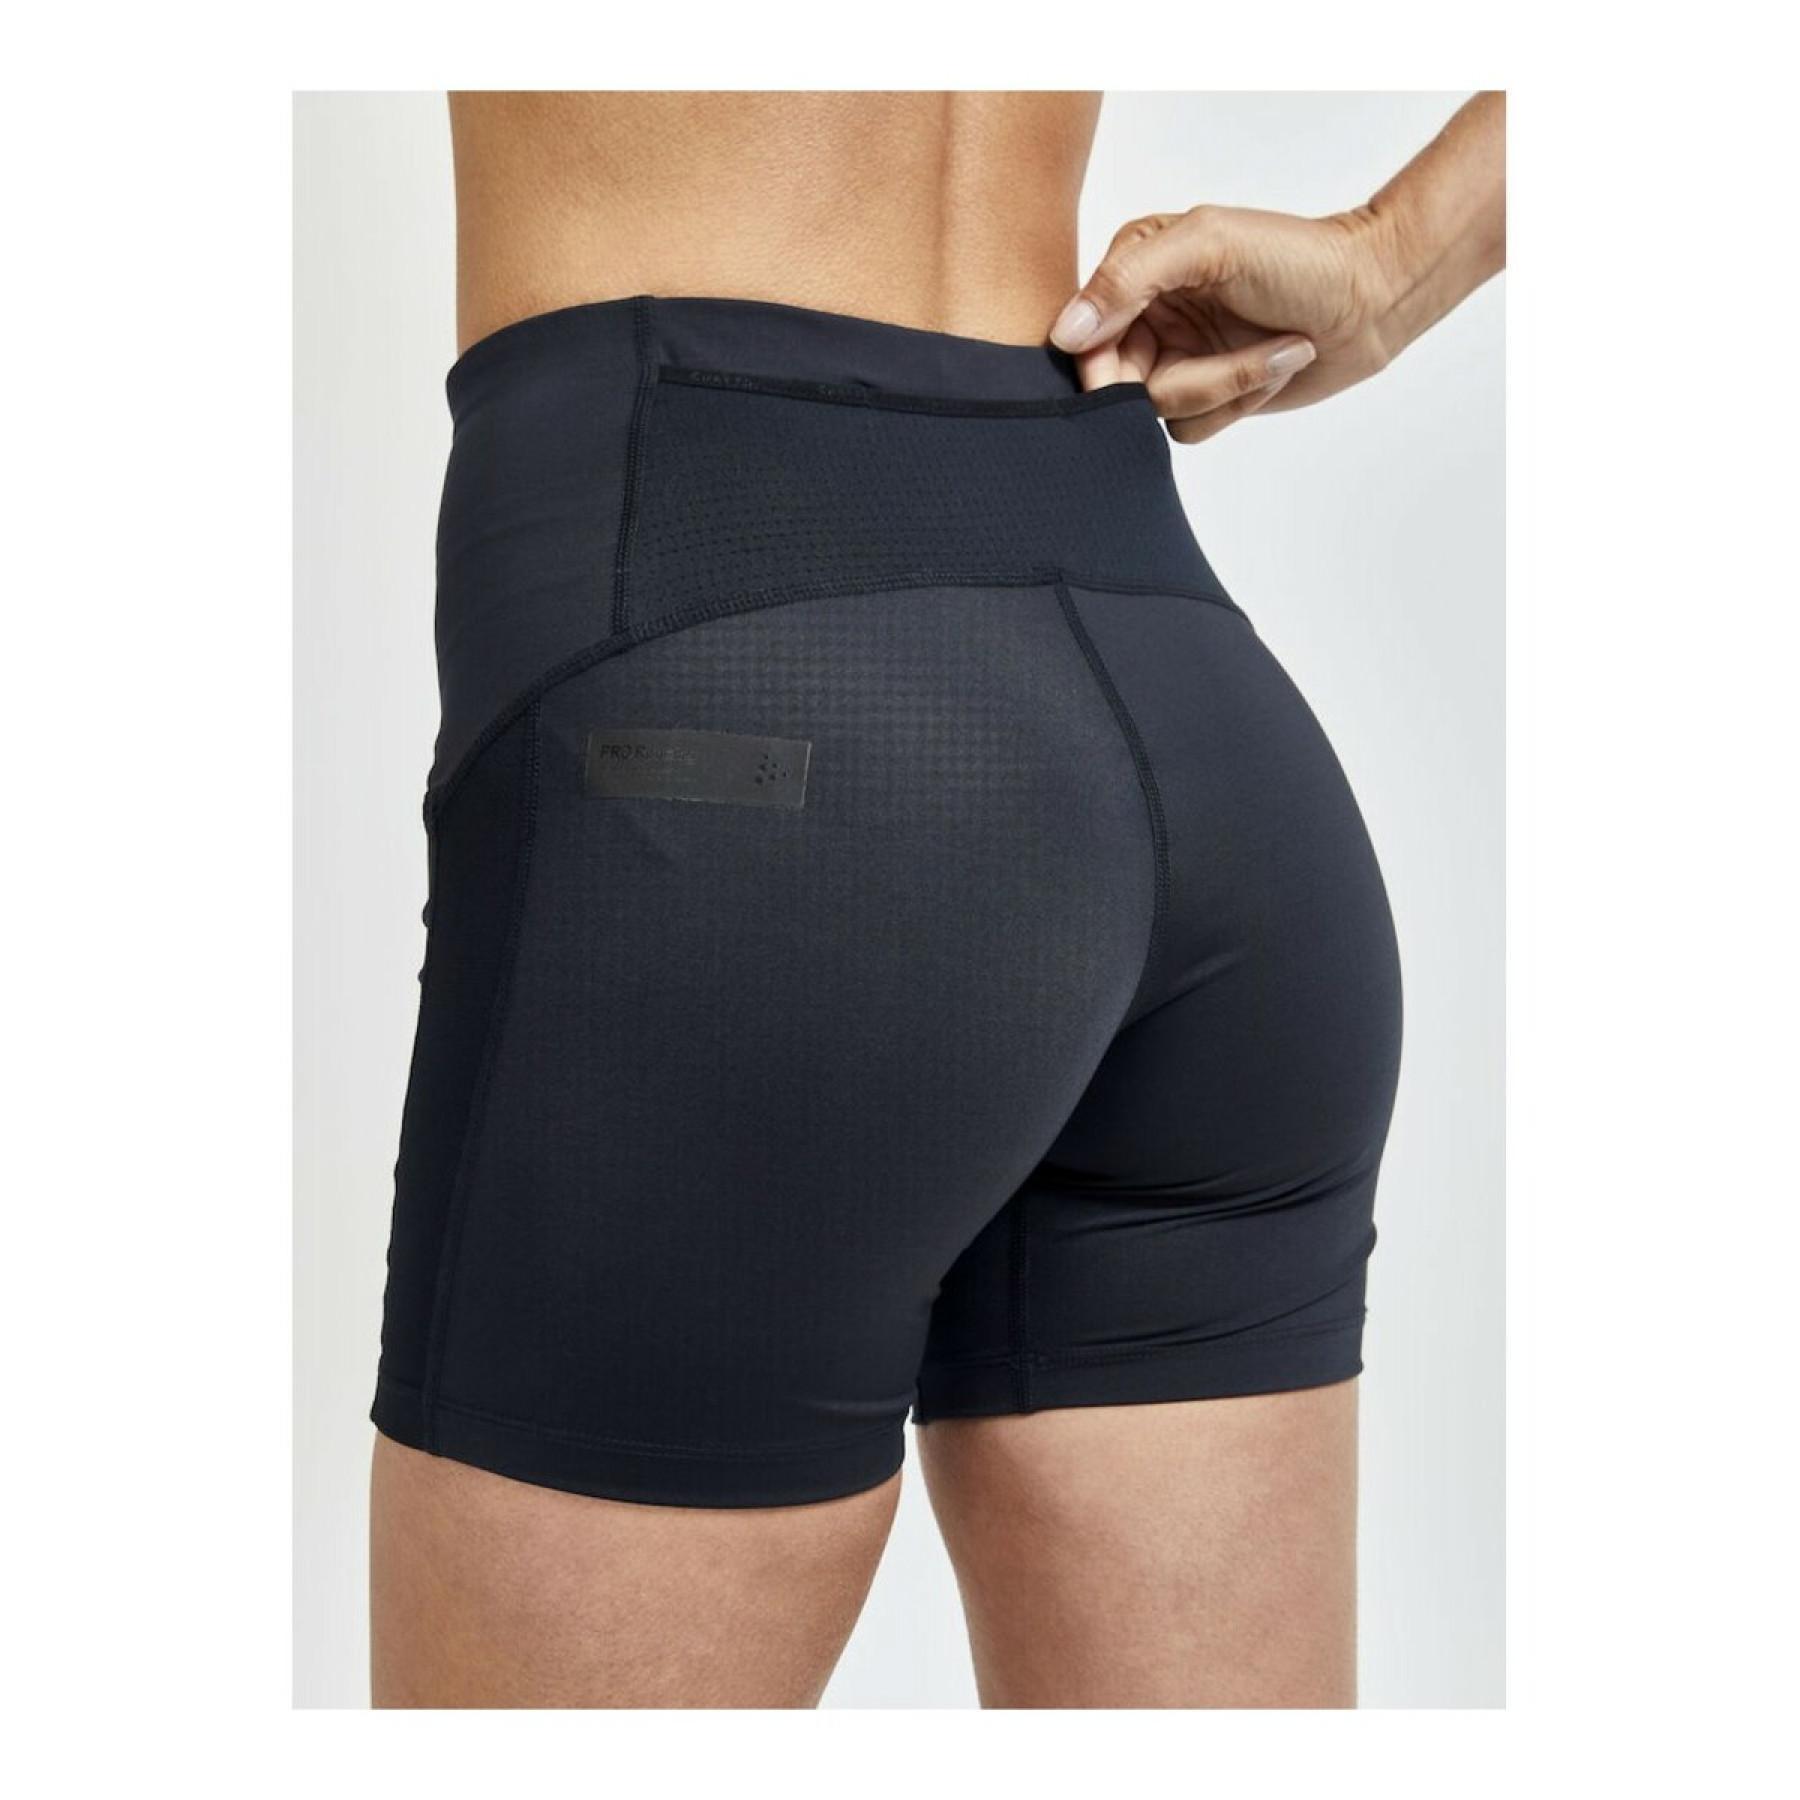 Women's compression shorts Craft pro hypervent